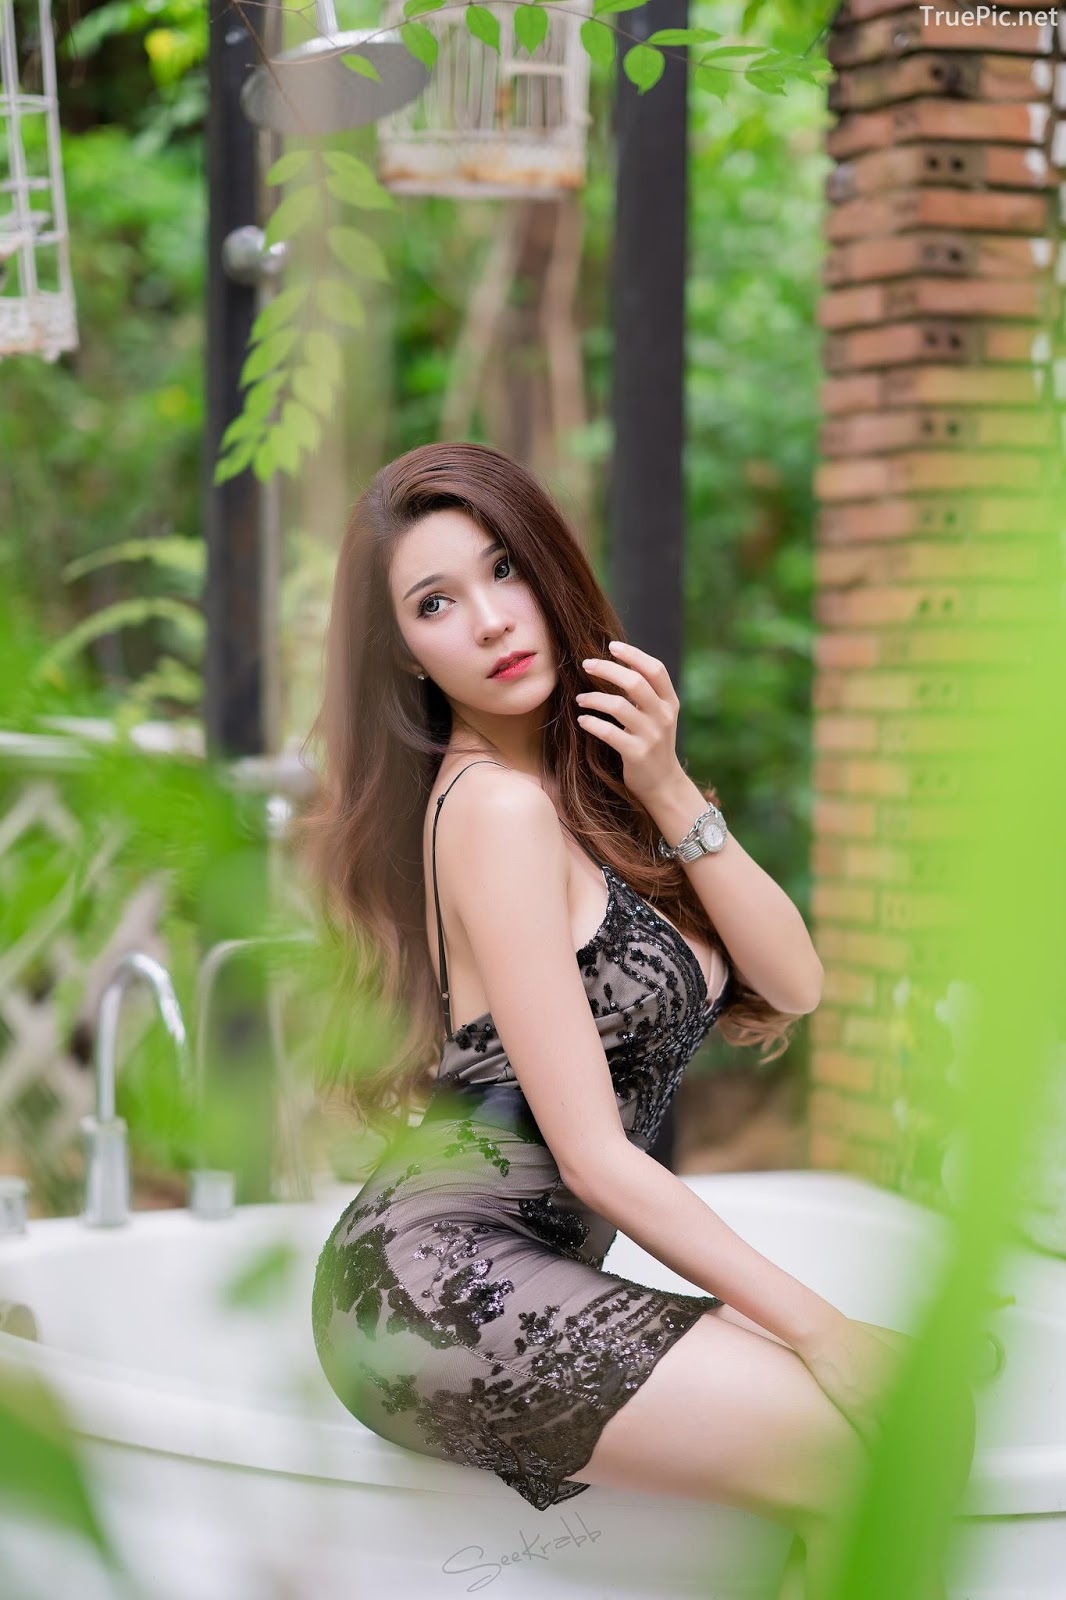 Thailand hot model - Janet Kanokwan Saesim - Black sexy garden - TruePic.net - Picture 14